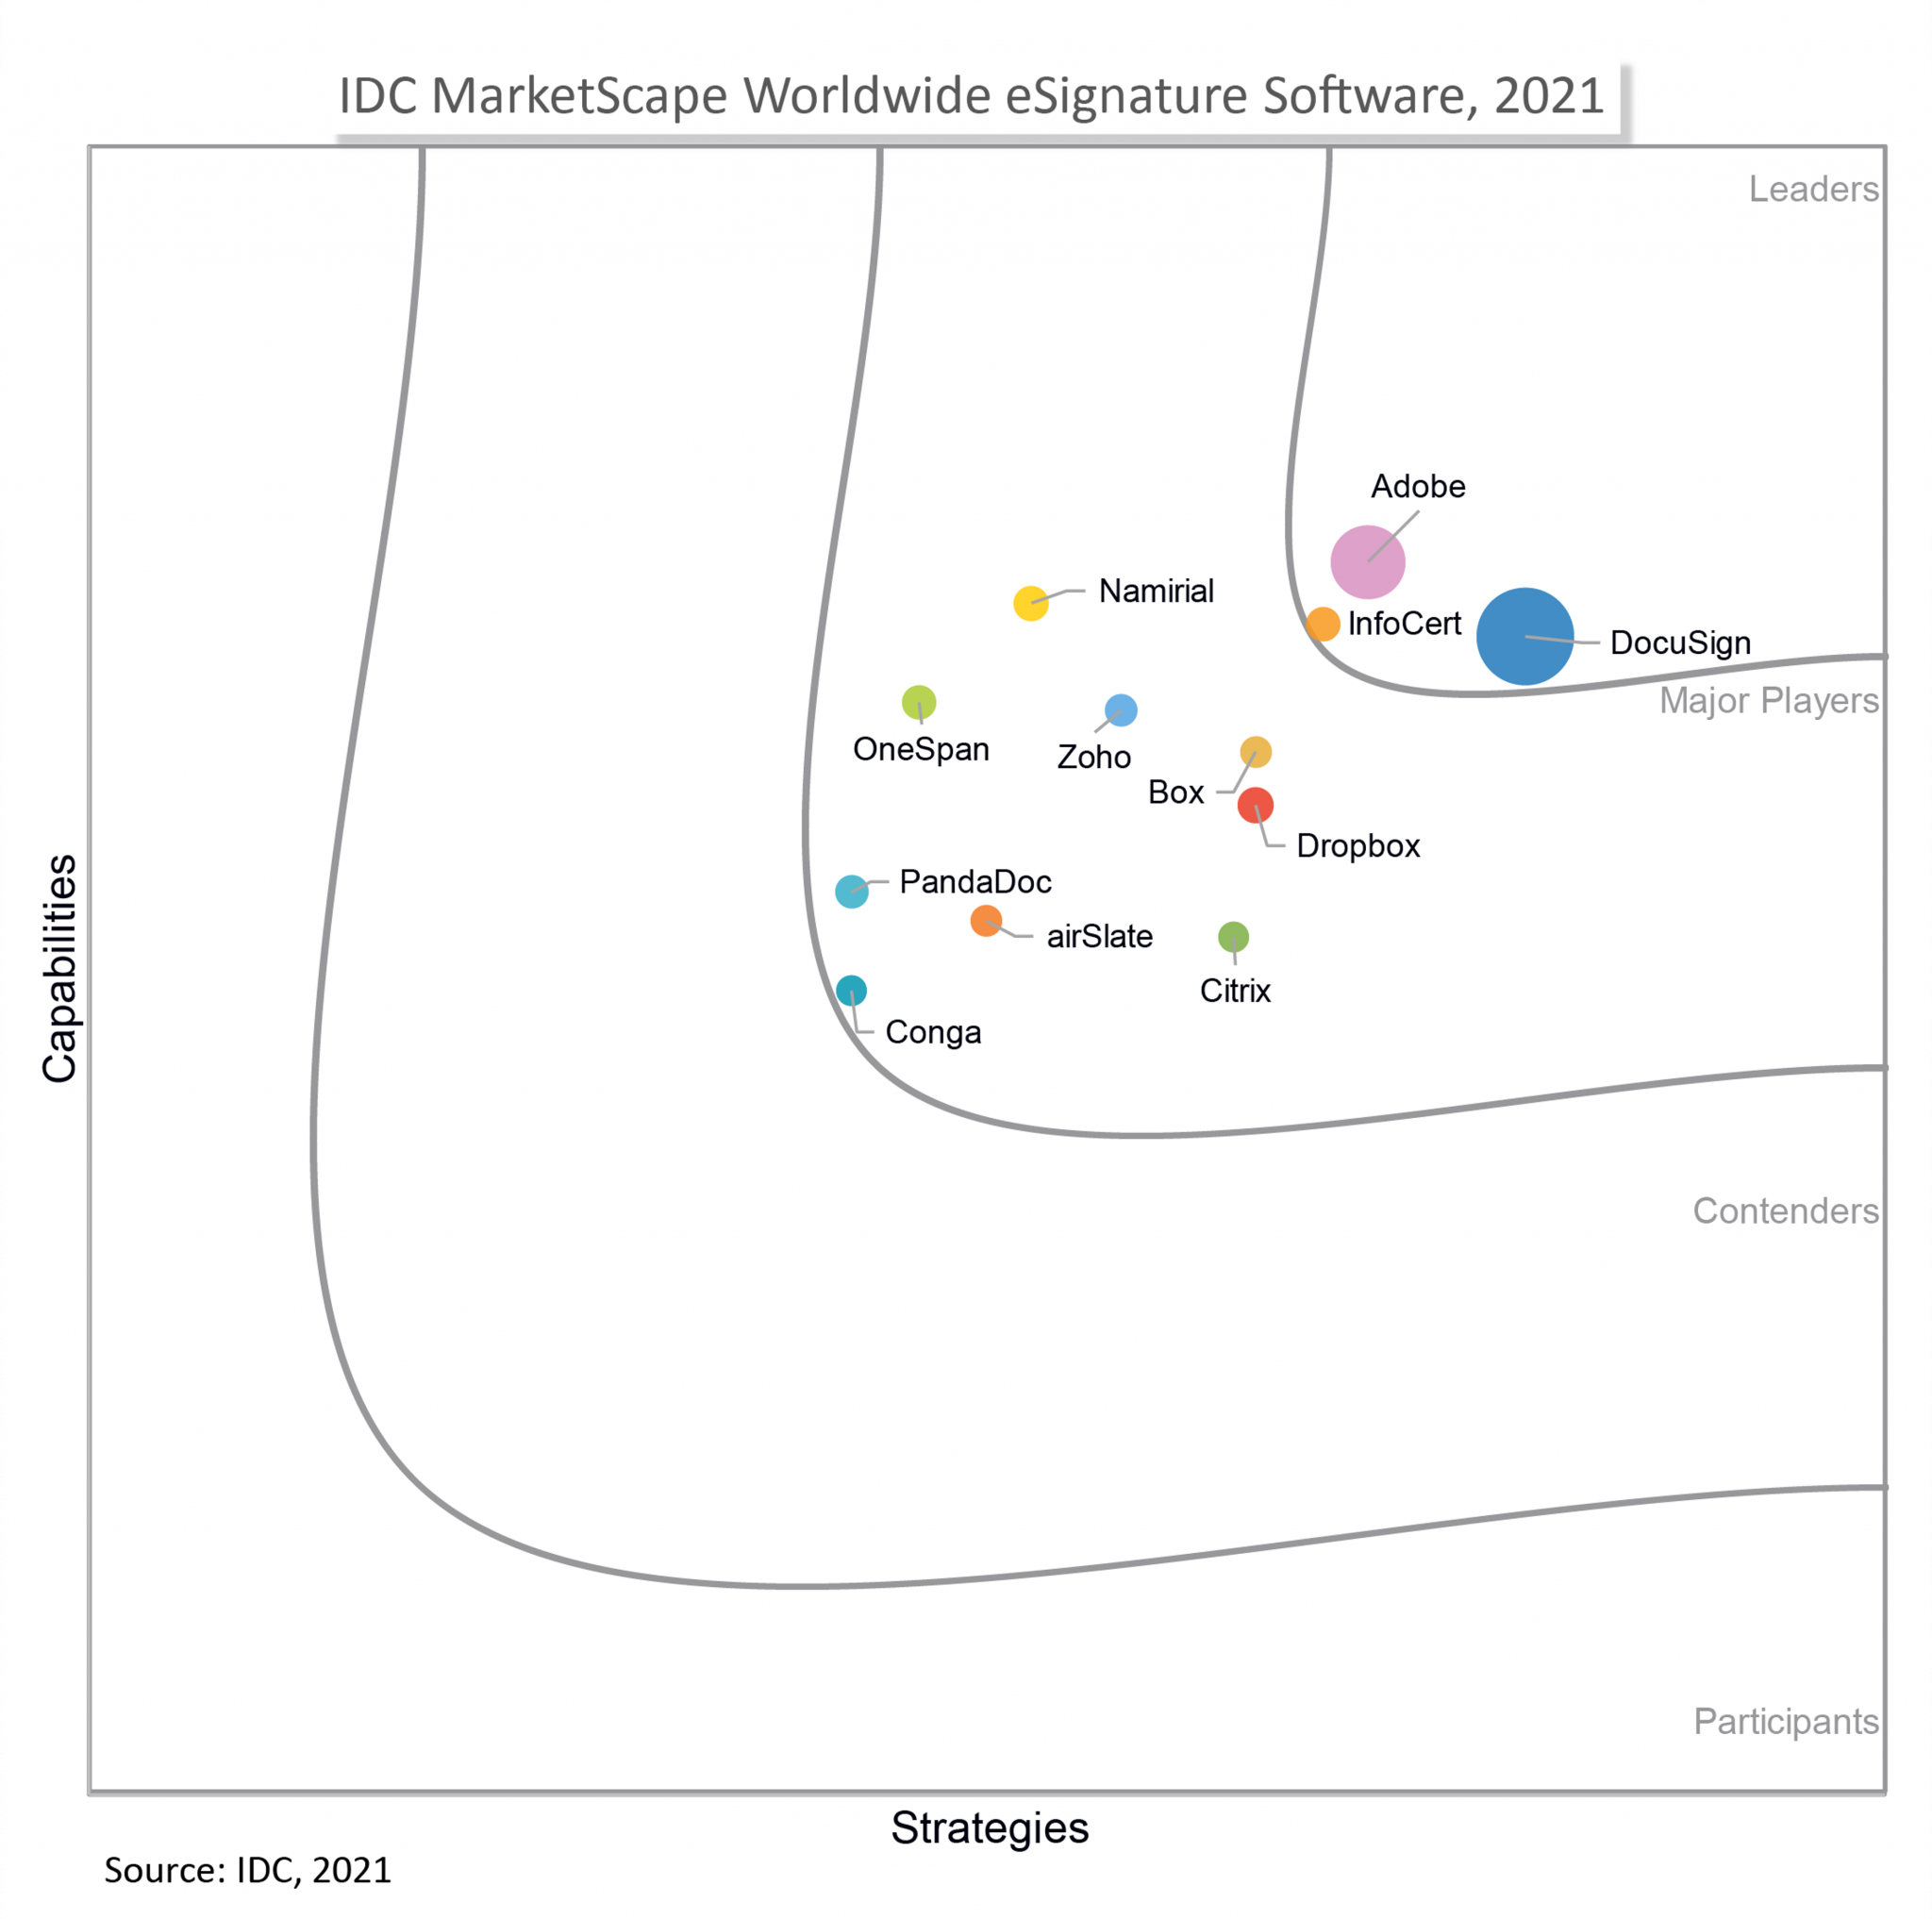 IDC MarketScape Worldwide eSignature Software, 2021